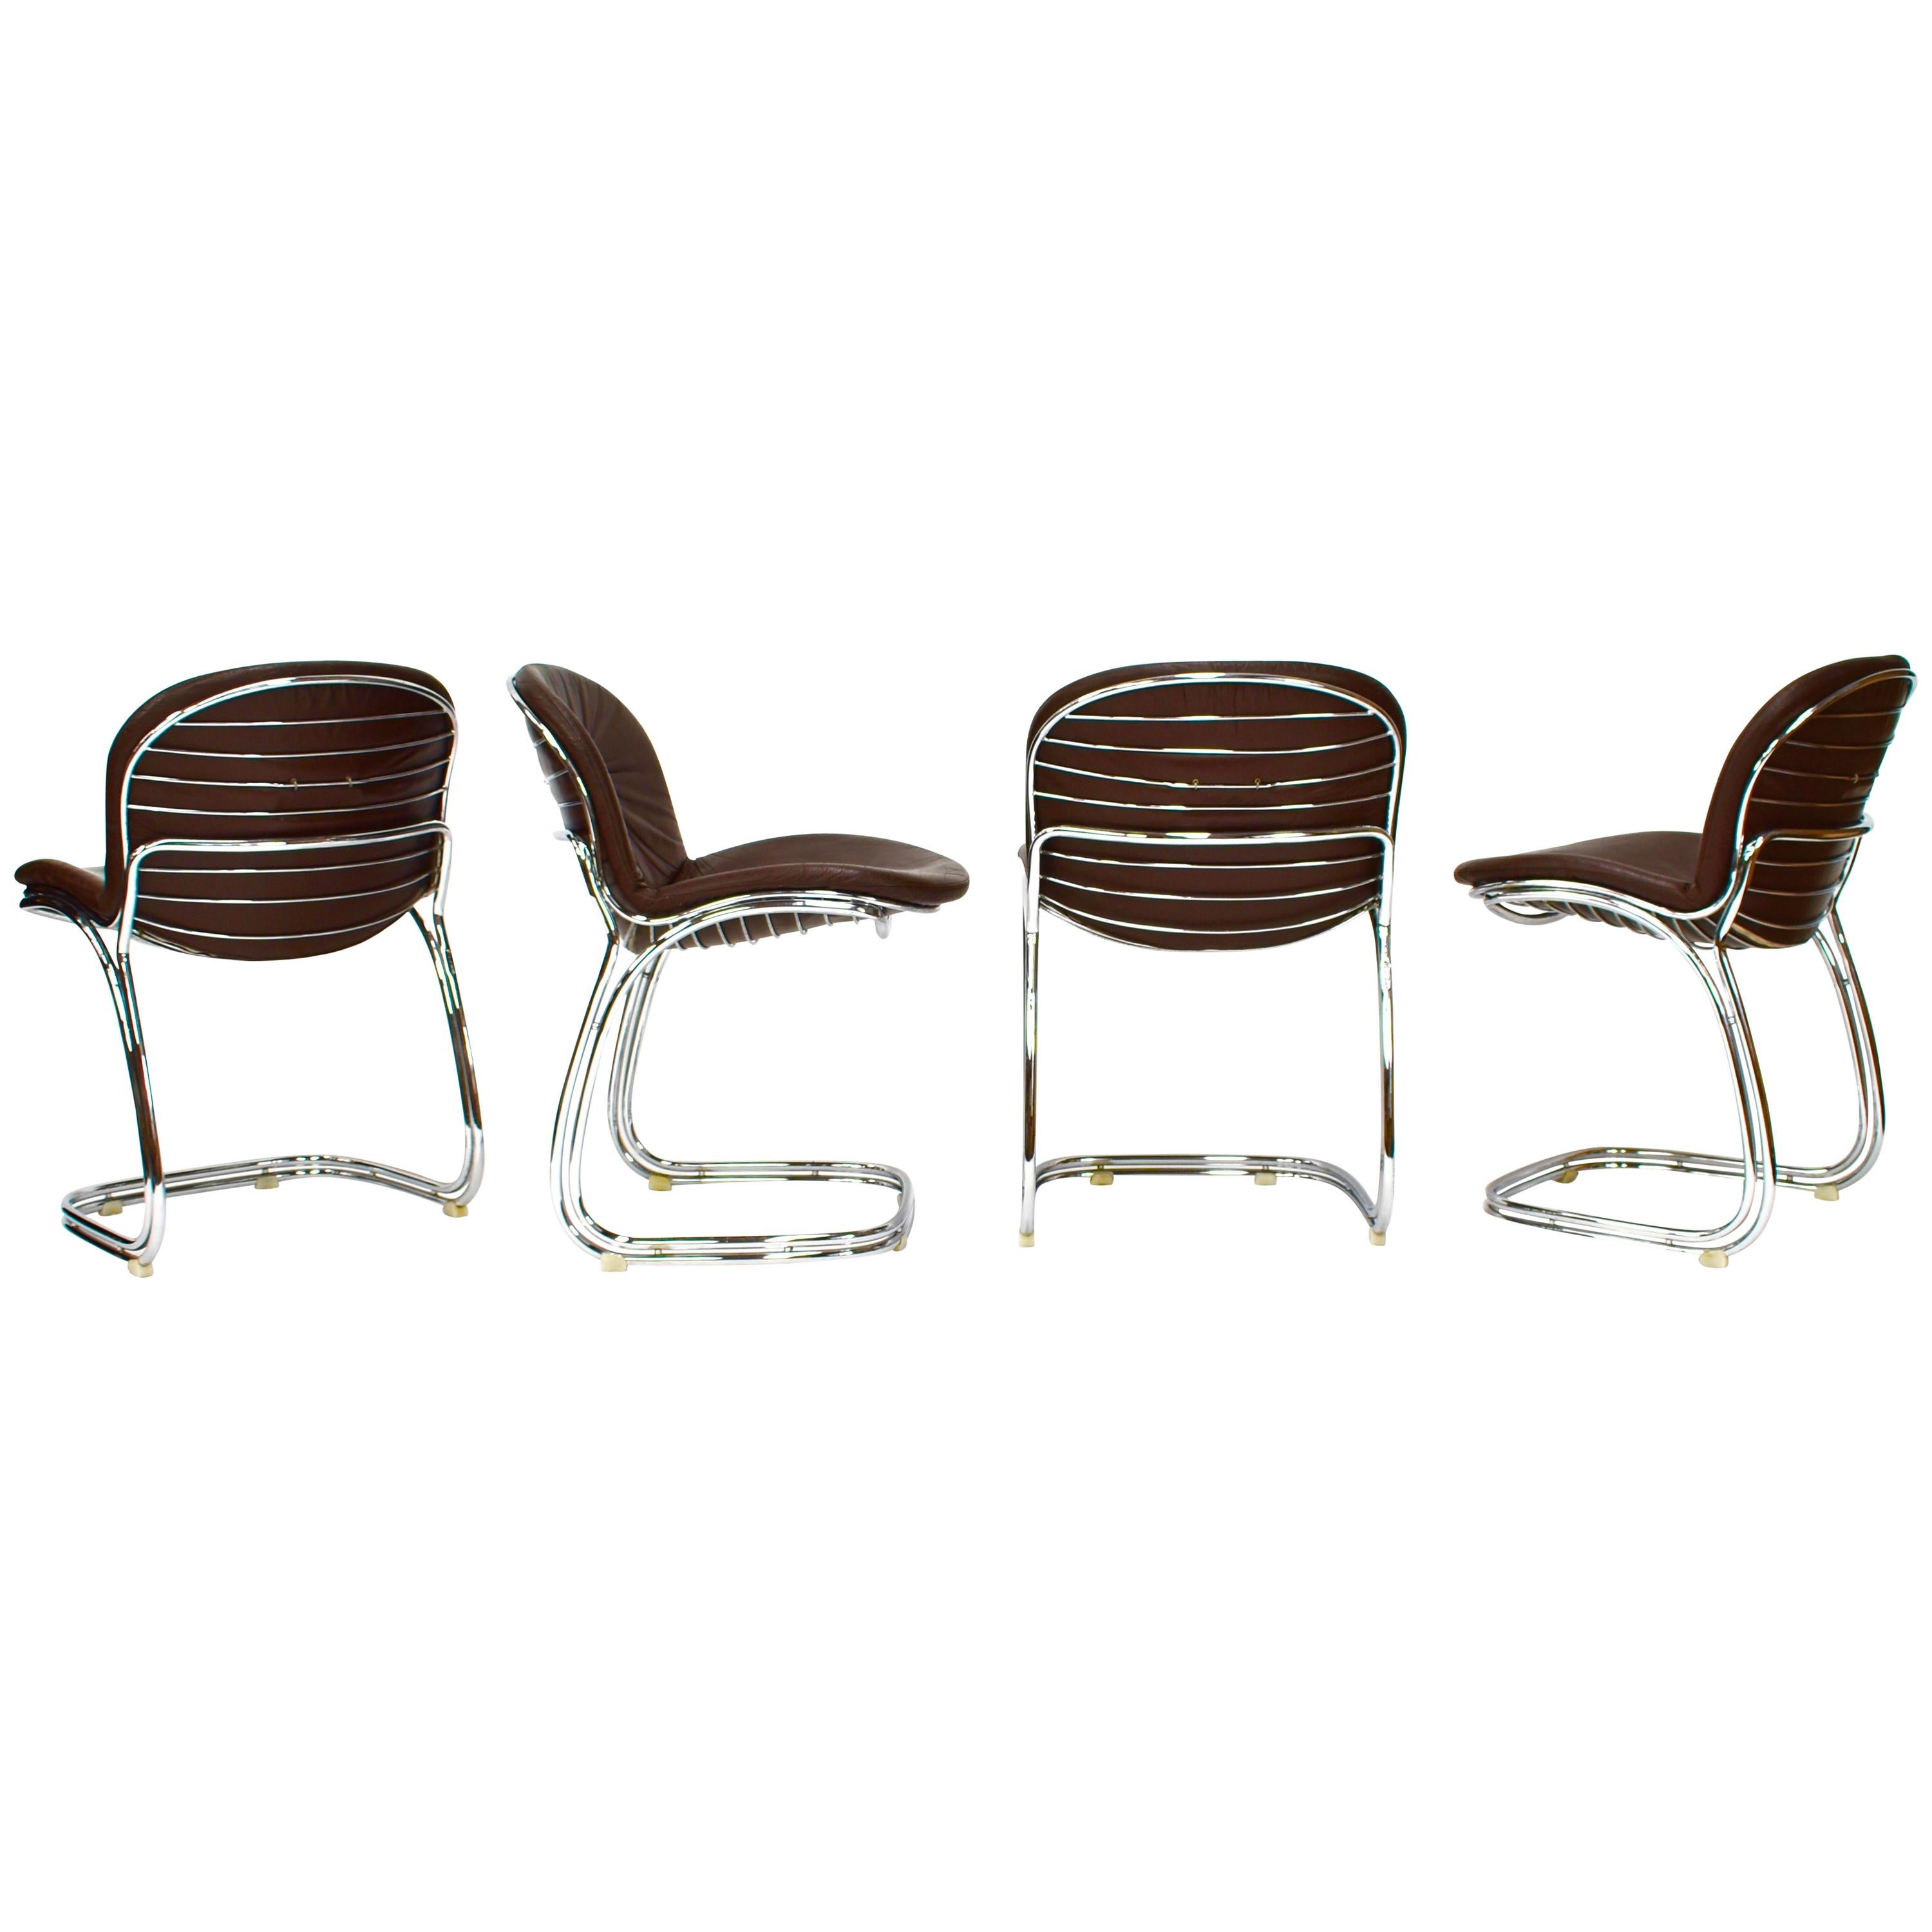 Gastone Rinaldi 'Sabrina' Chocolate Brown Leather Chairs for RIMA, Italy